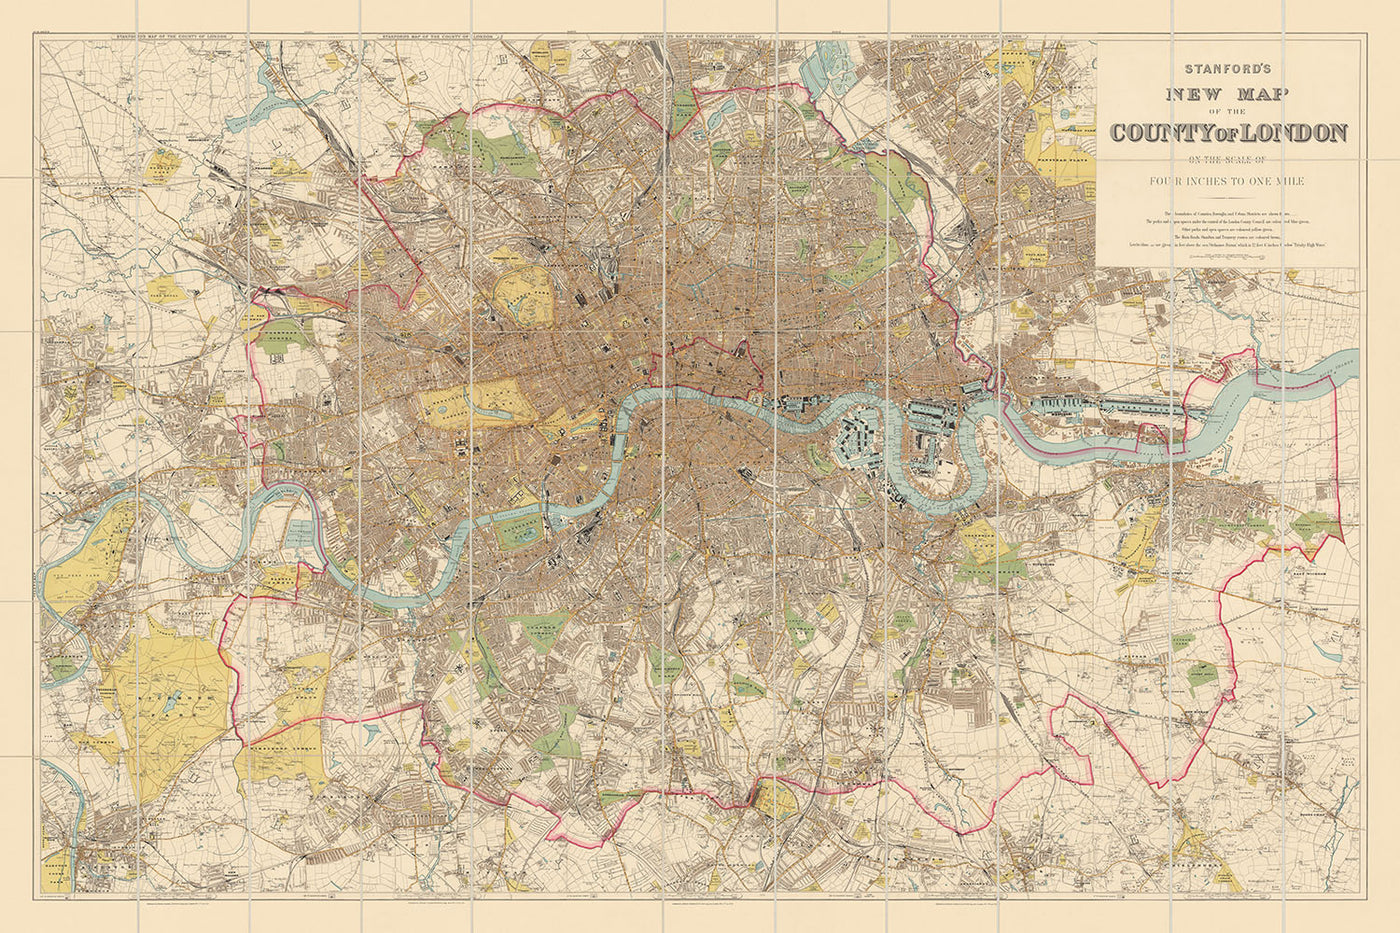 Alte Karte von London von Stanford, 1905: Buckingham Palace, St. Paul's, Themse, Houses of Parliament, Hyde Park